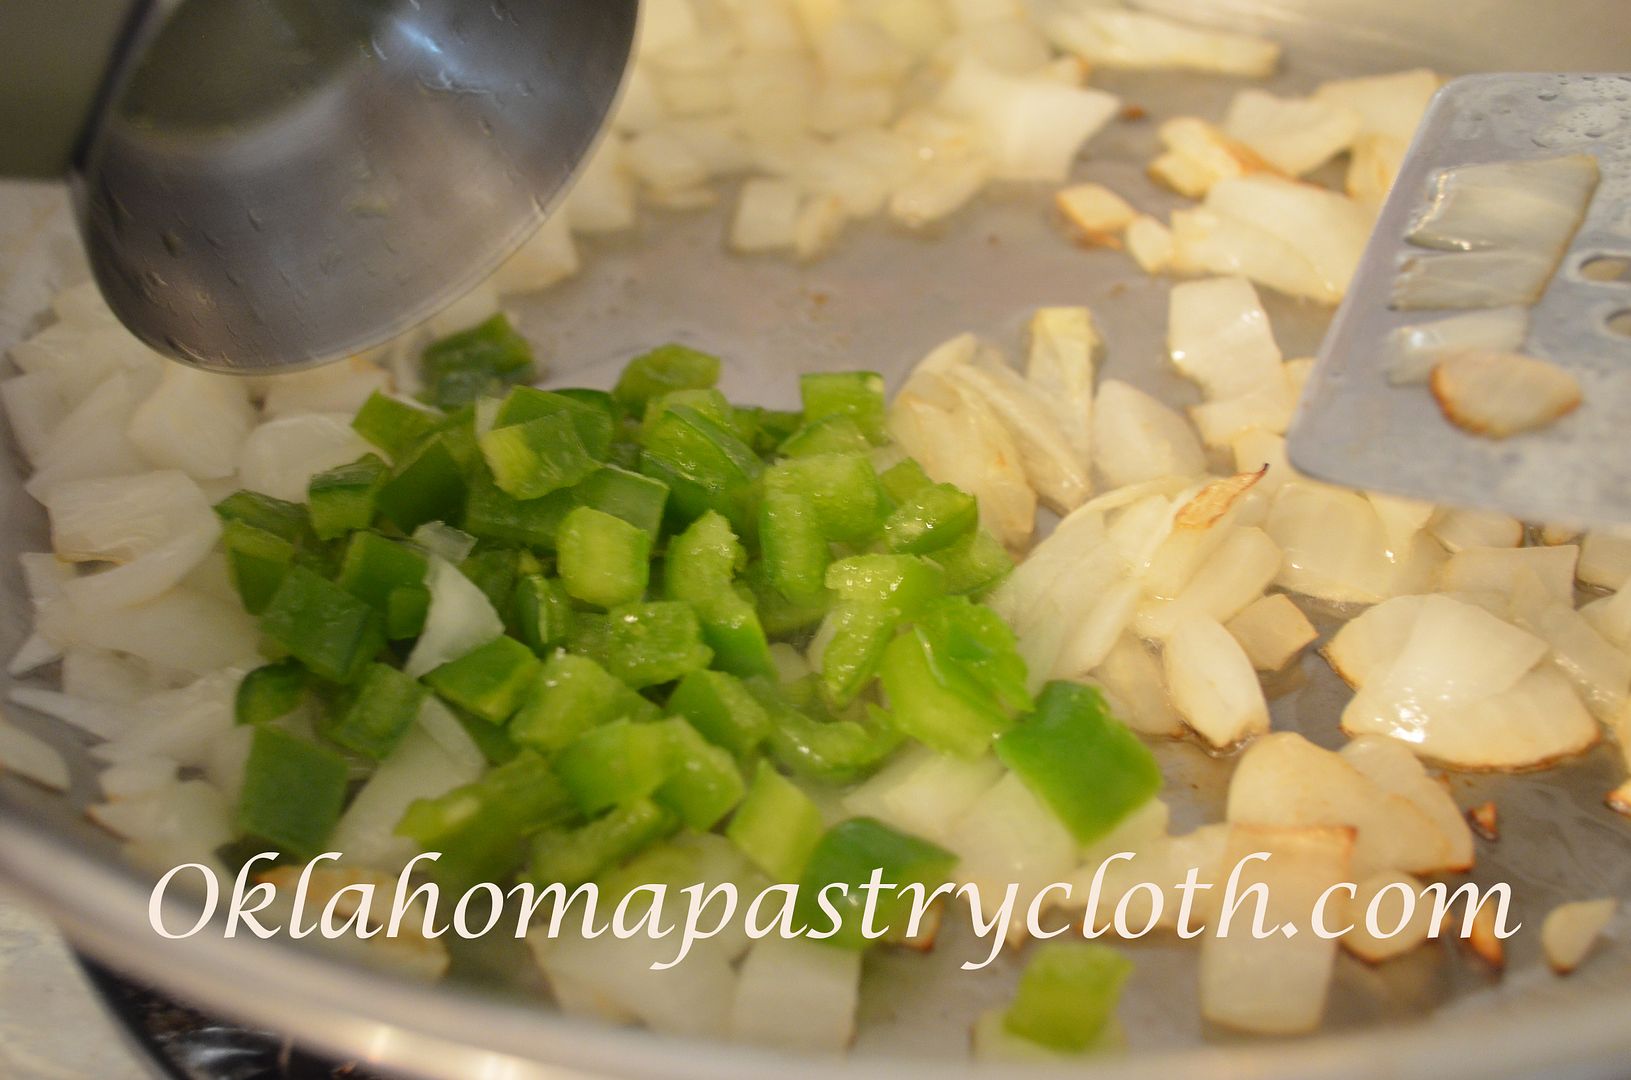  photo 1 saute onions and peppers_zpsfiqjcf5l.jpg